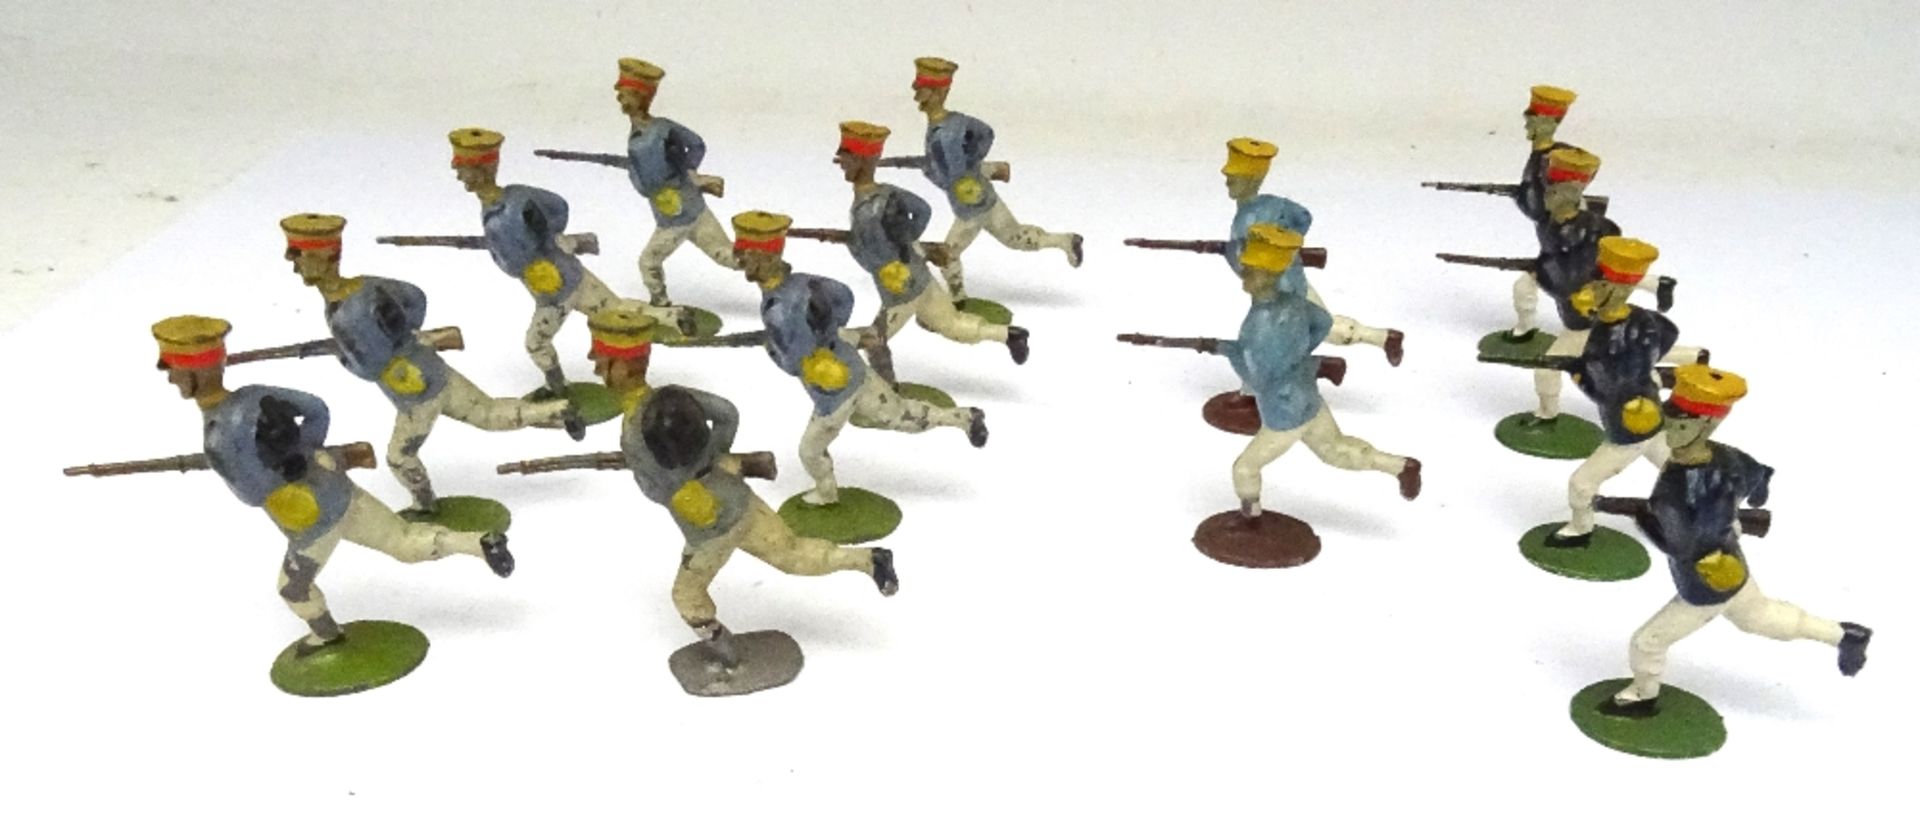 Britains set 134, Japanese Infantry charging - Image 2 of 4